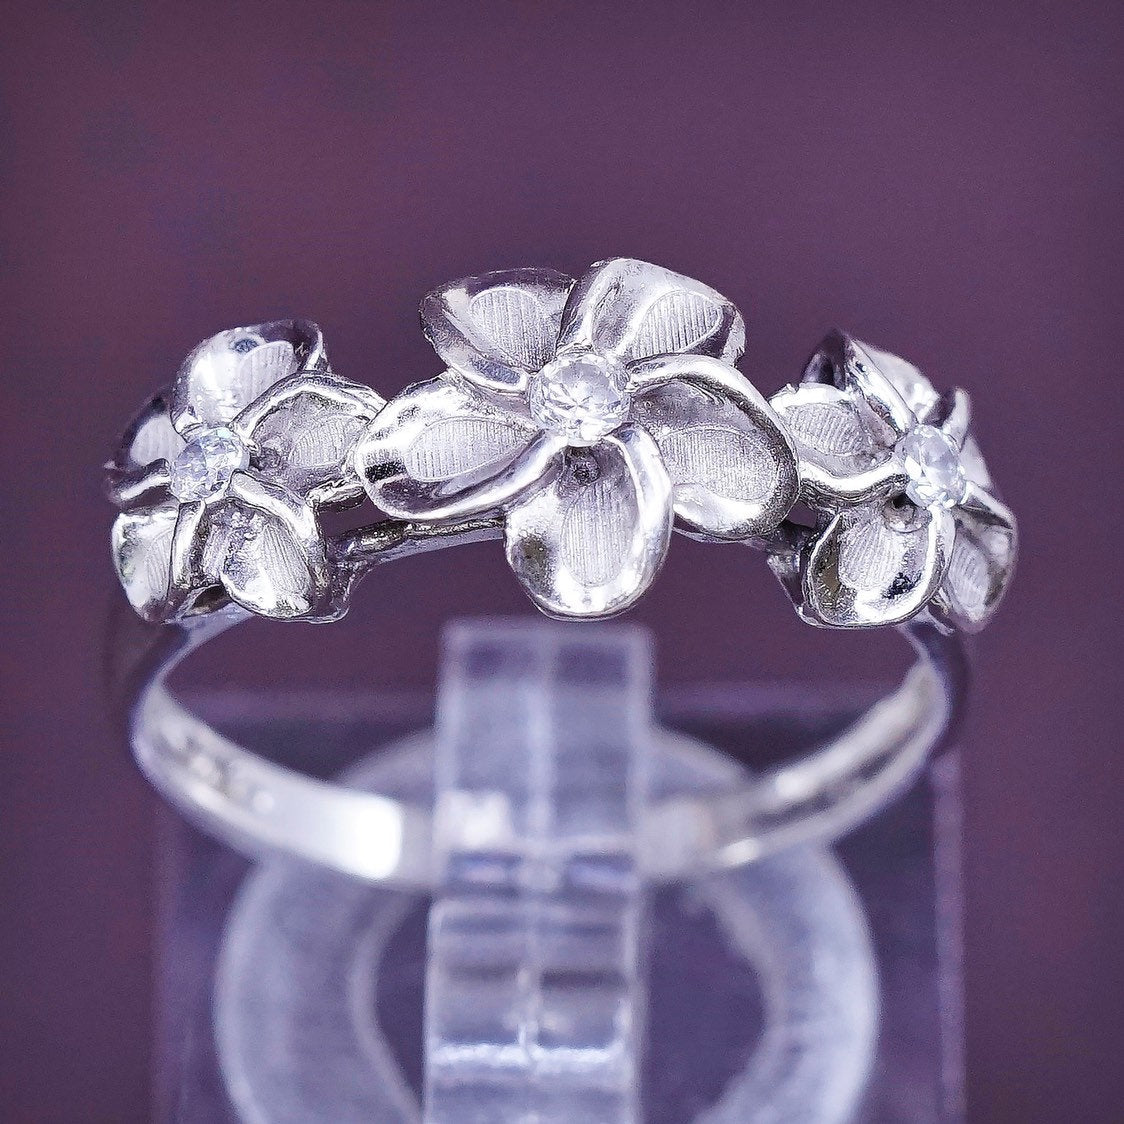 sz 8.25, vtg Sterling silver flower ring, modern 925 silver with Cz